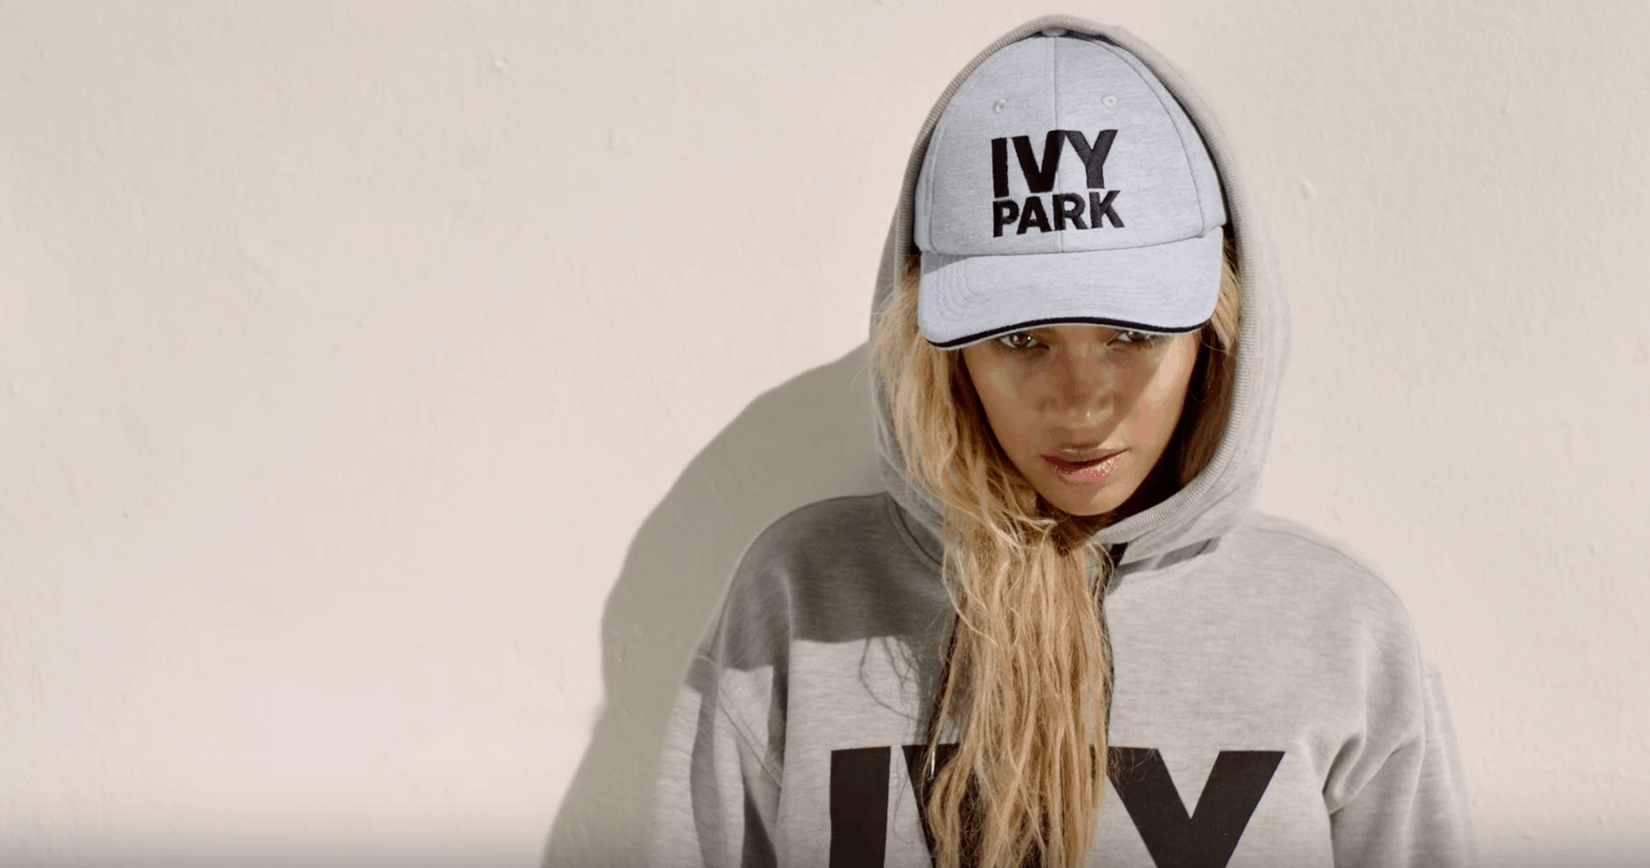 Beyonce Ivy Park fashion line